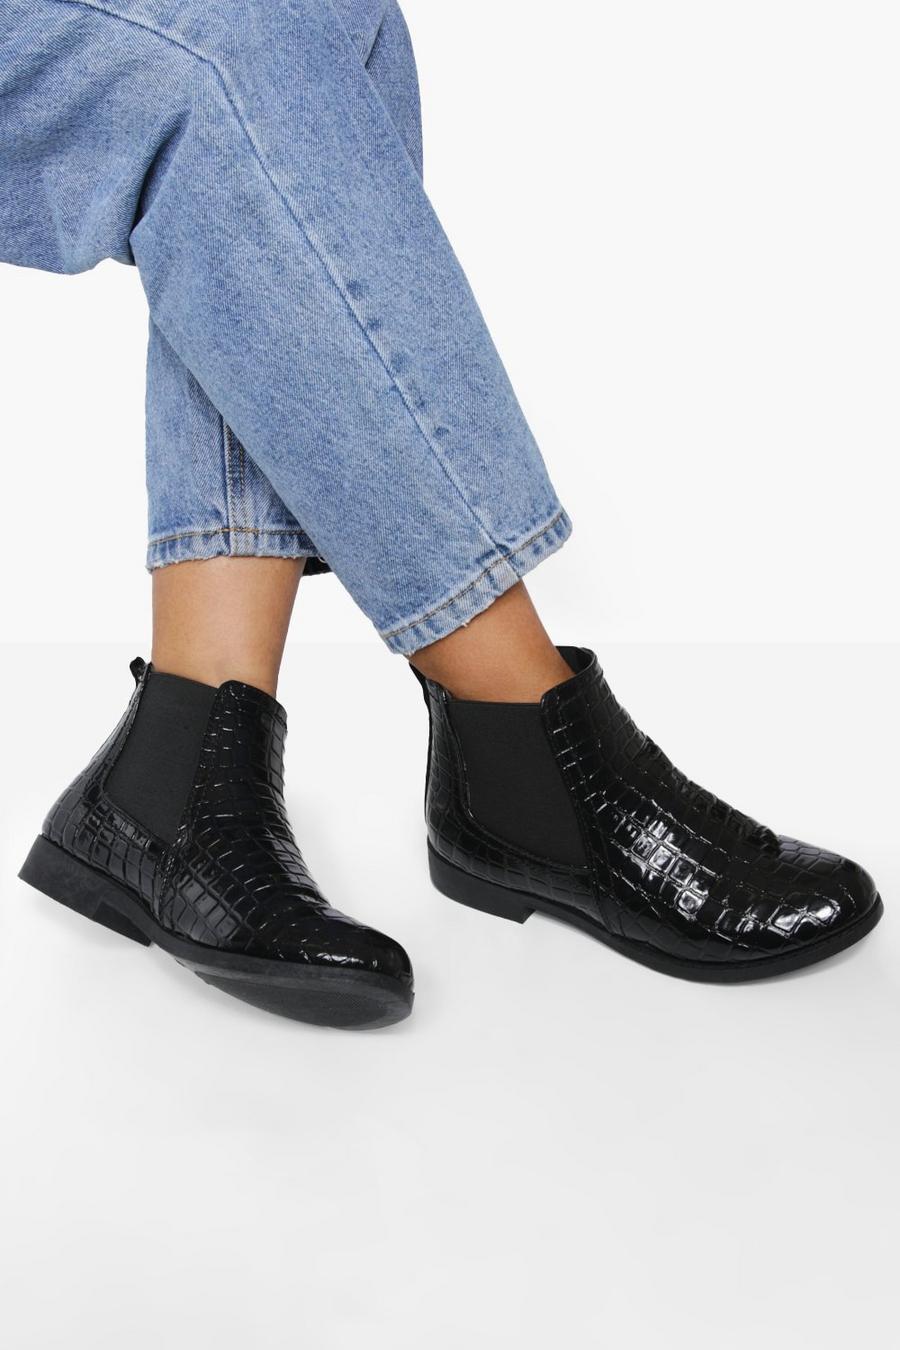 Black Patent Croc Chelsea Boots image number 1